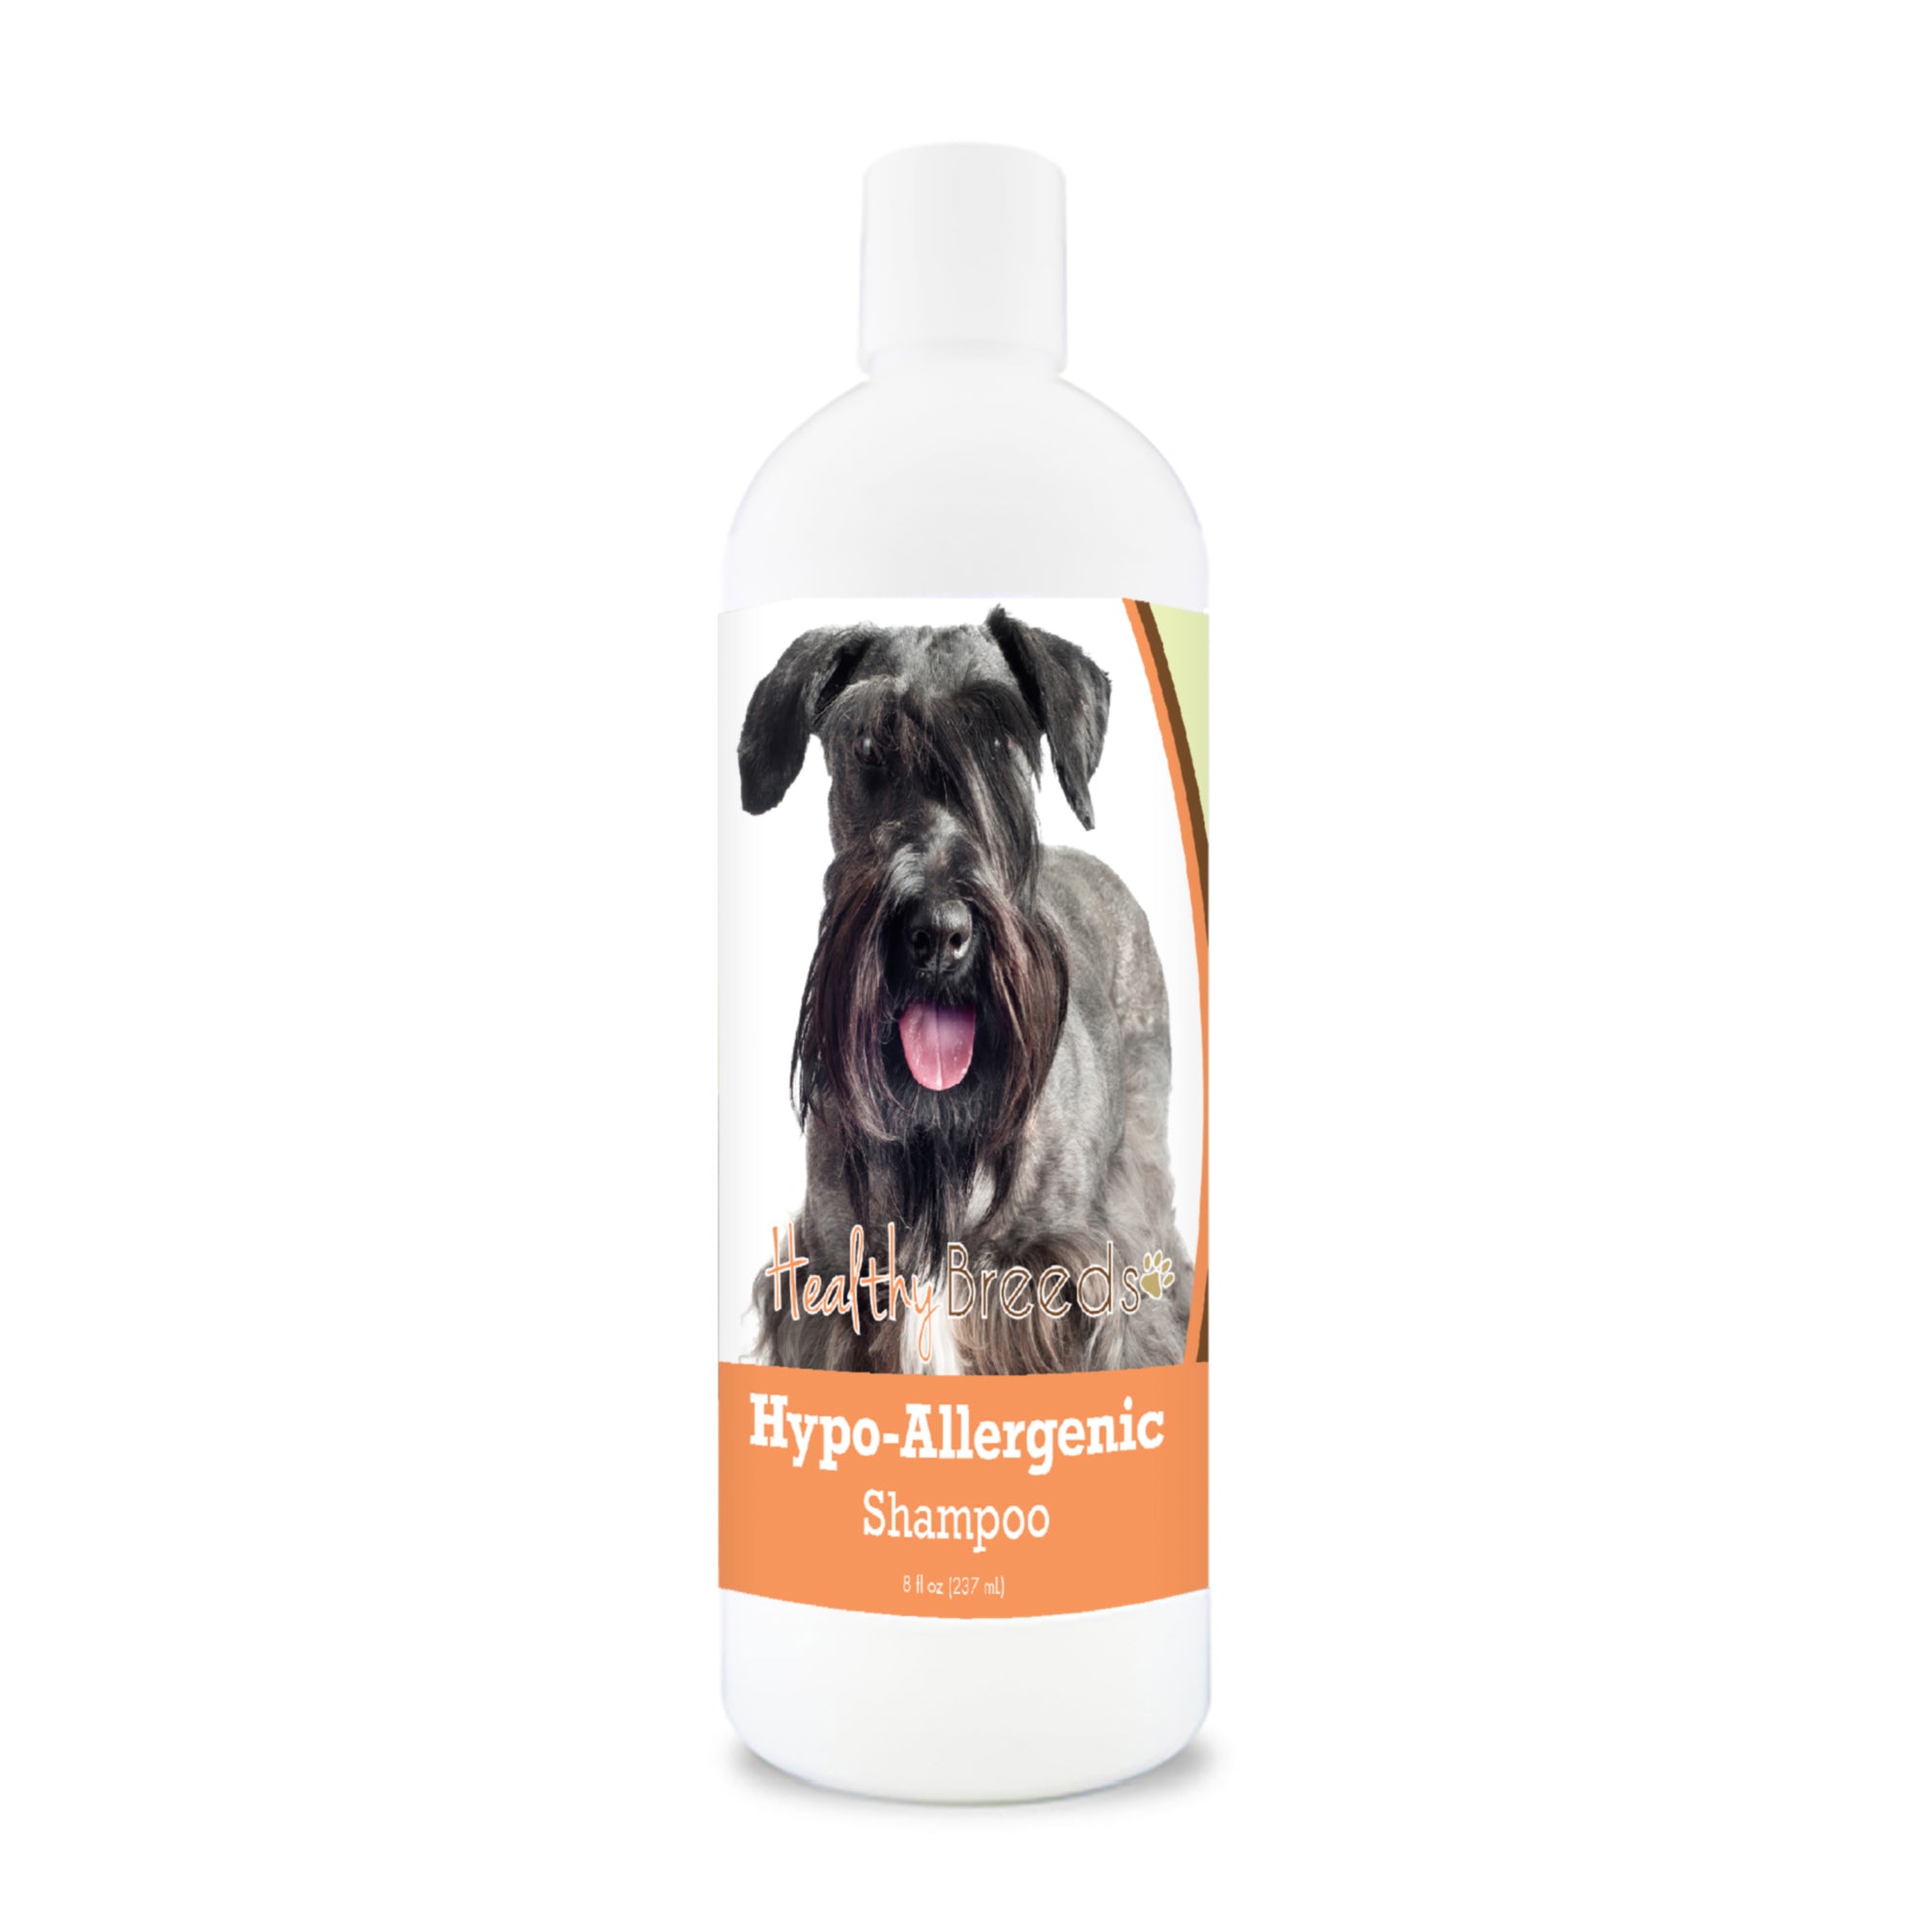 Cesky Terrier Hypo-Allergenic Shampoo 8 oz